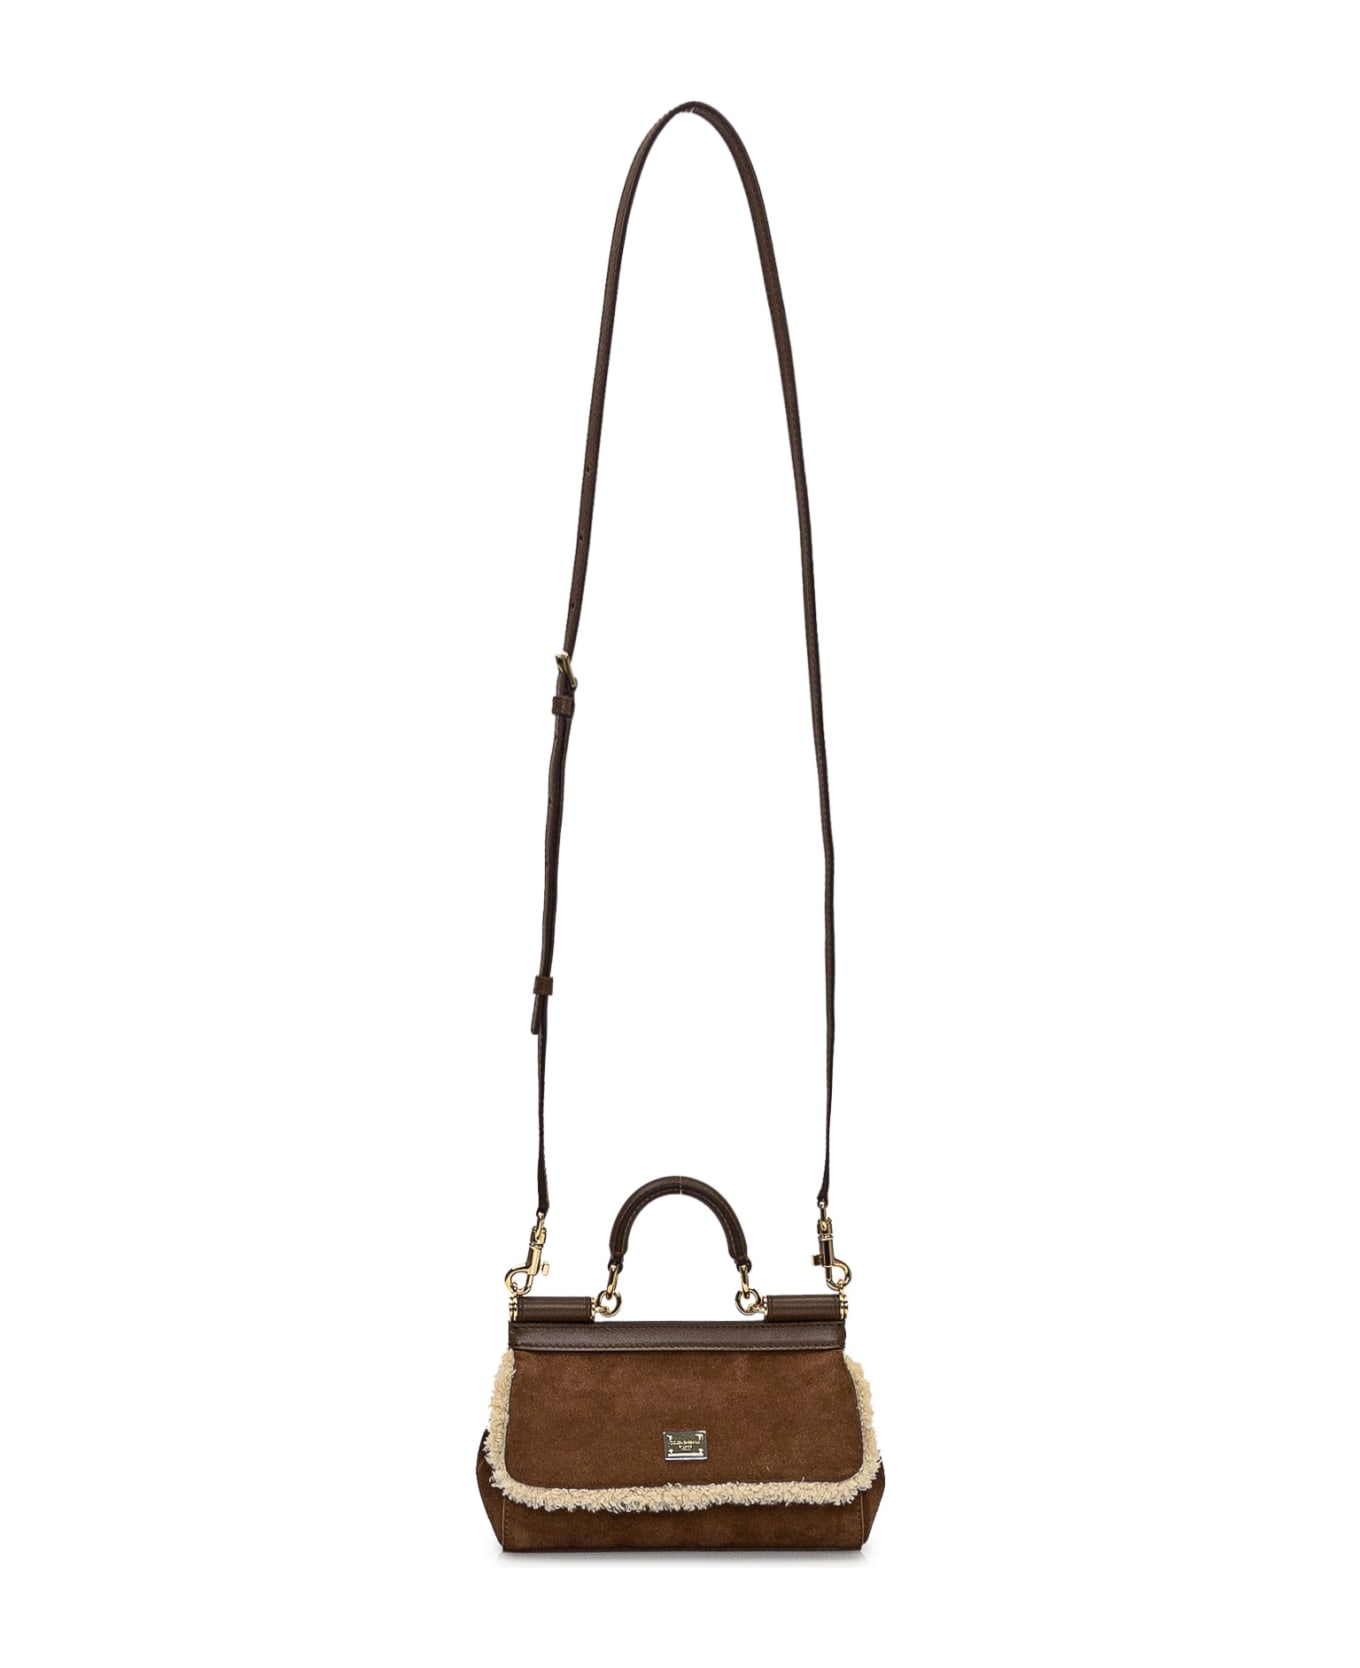 Dolce & Gabbana Sicily Handbag - brown トートバッグ